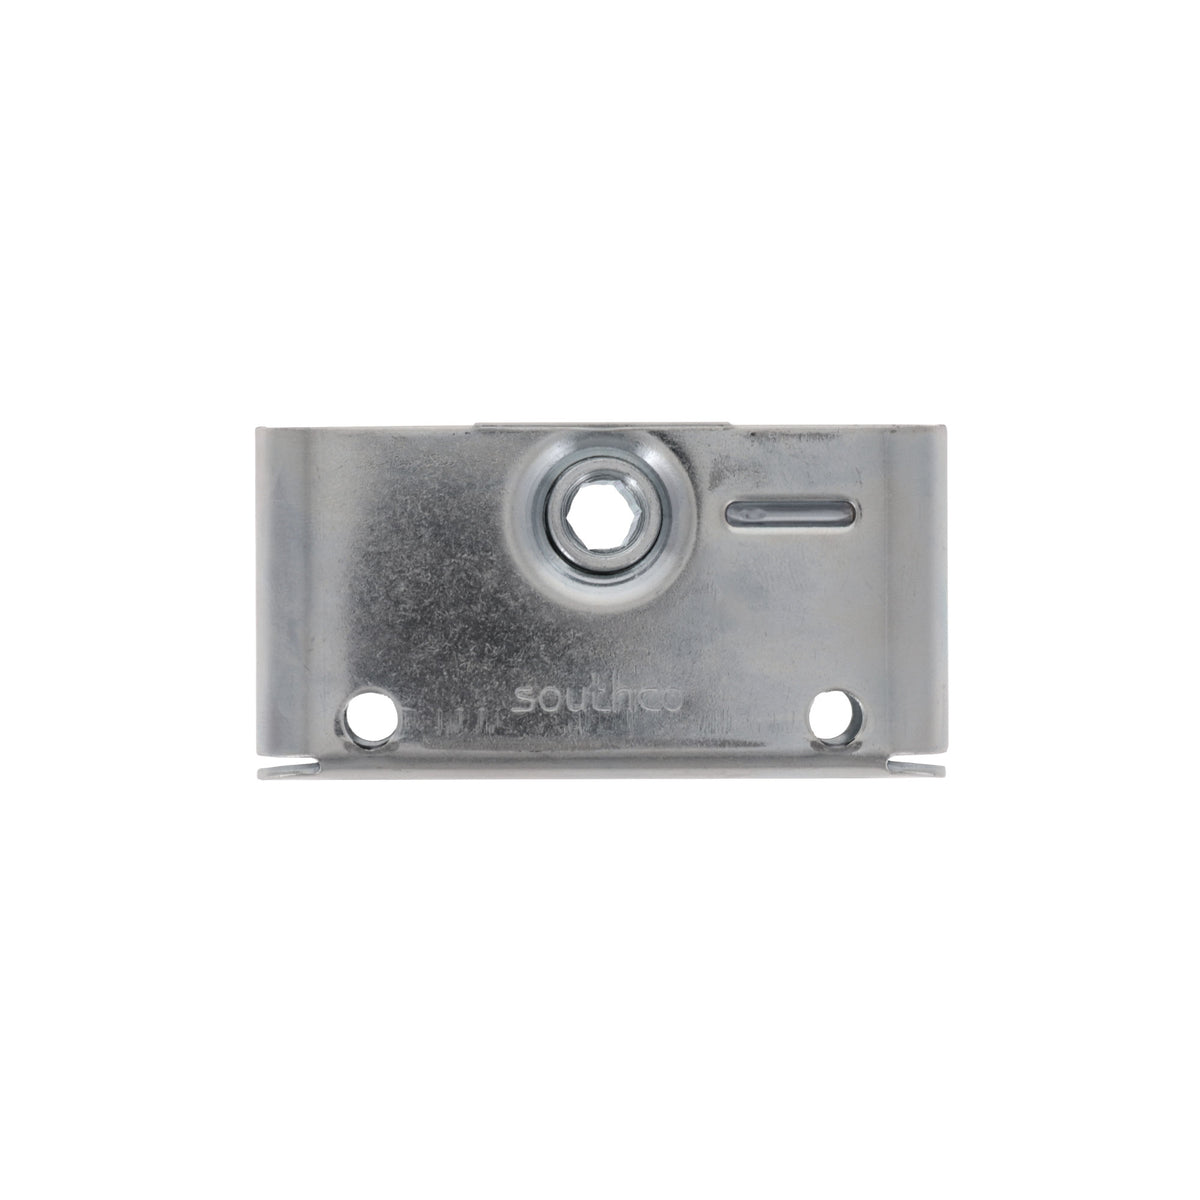 Southco Standard Roto-Lock - Loquet - R2-0055-02, vue de face